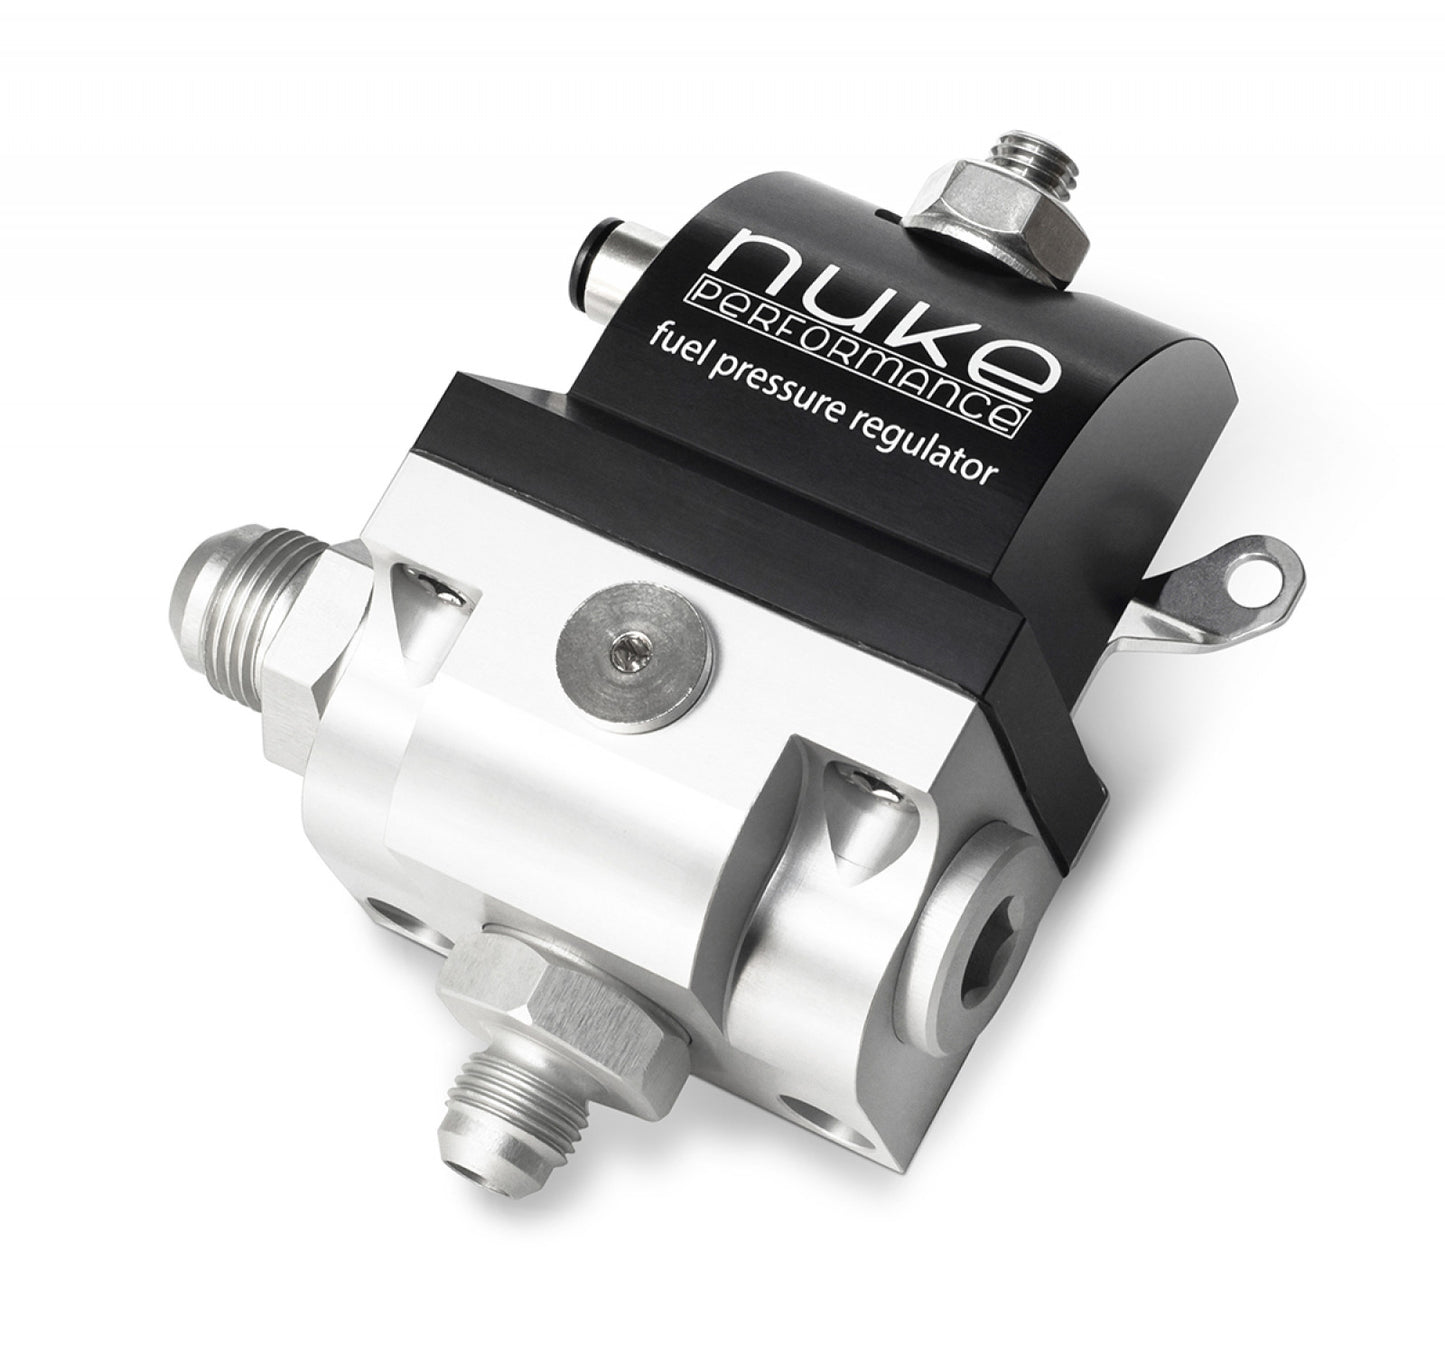 Nuke Performance FPR90 Fuel Pressure Regulator